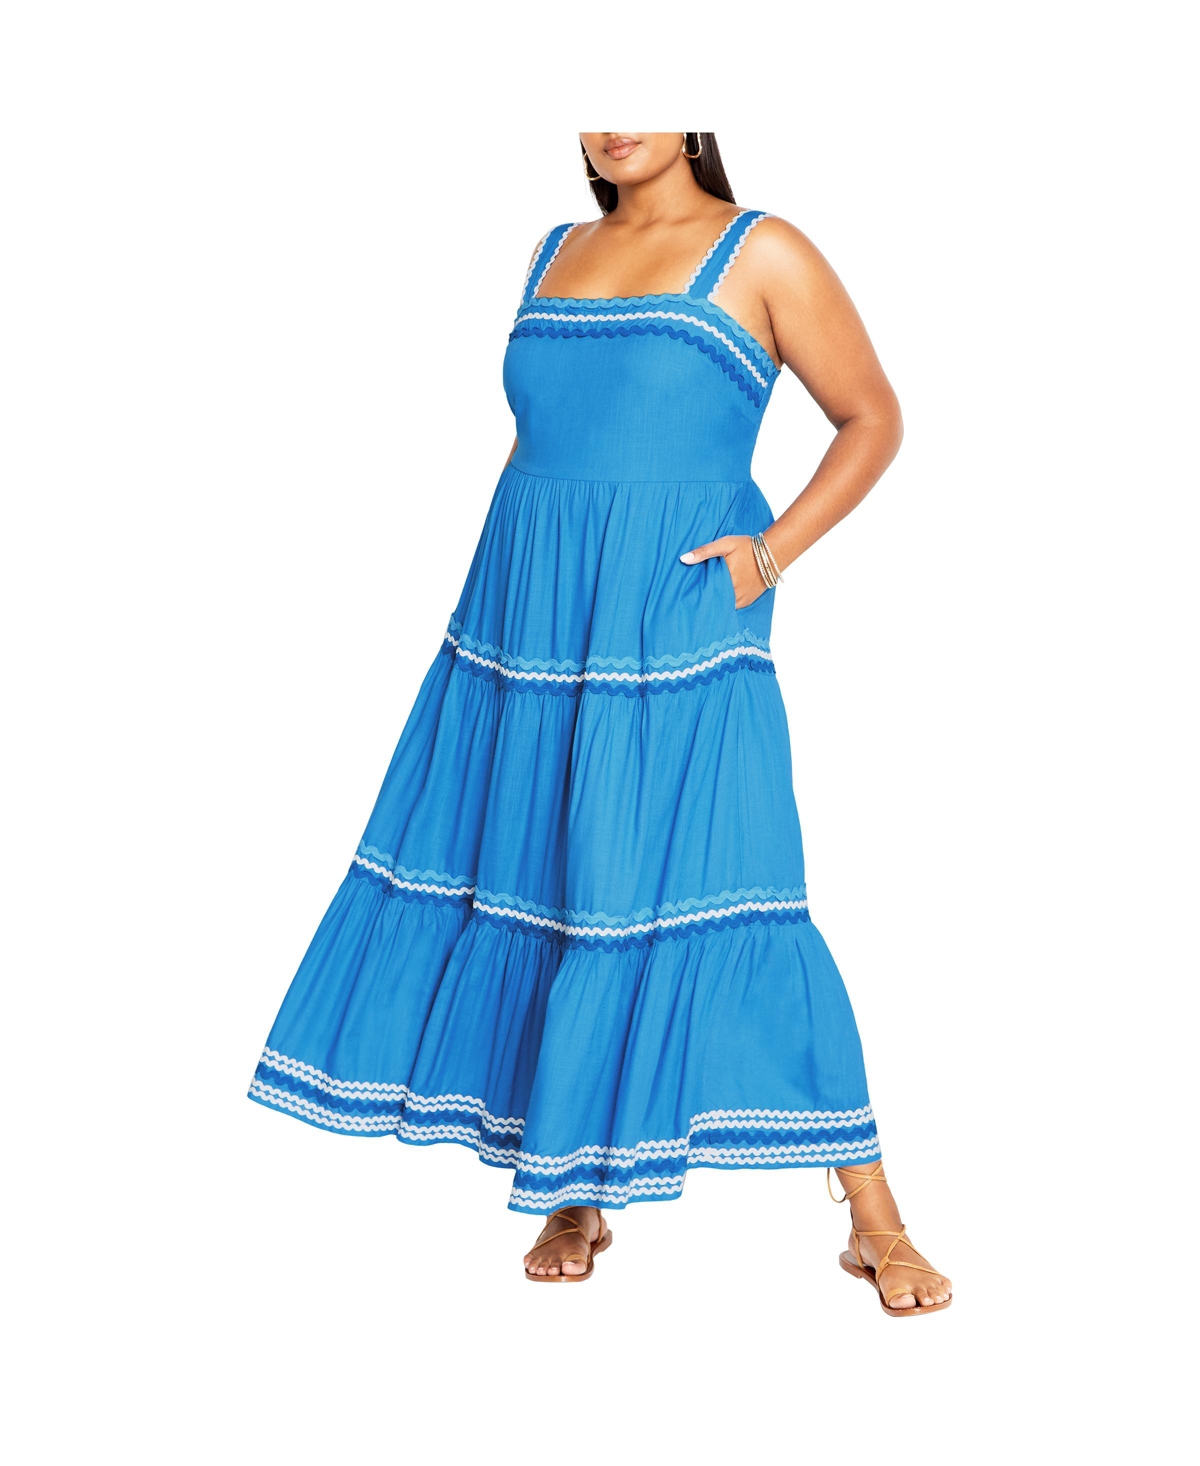 Plus Size Paradiso Dress - Ice blue